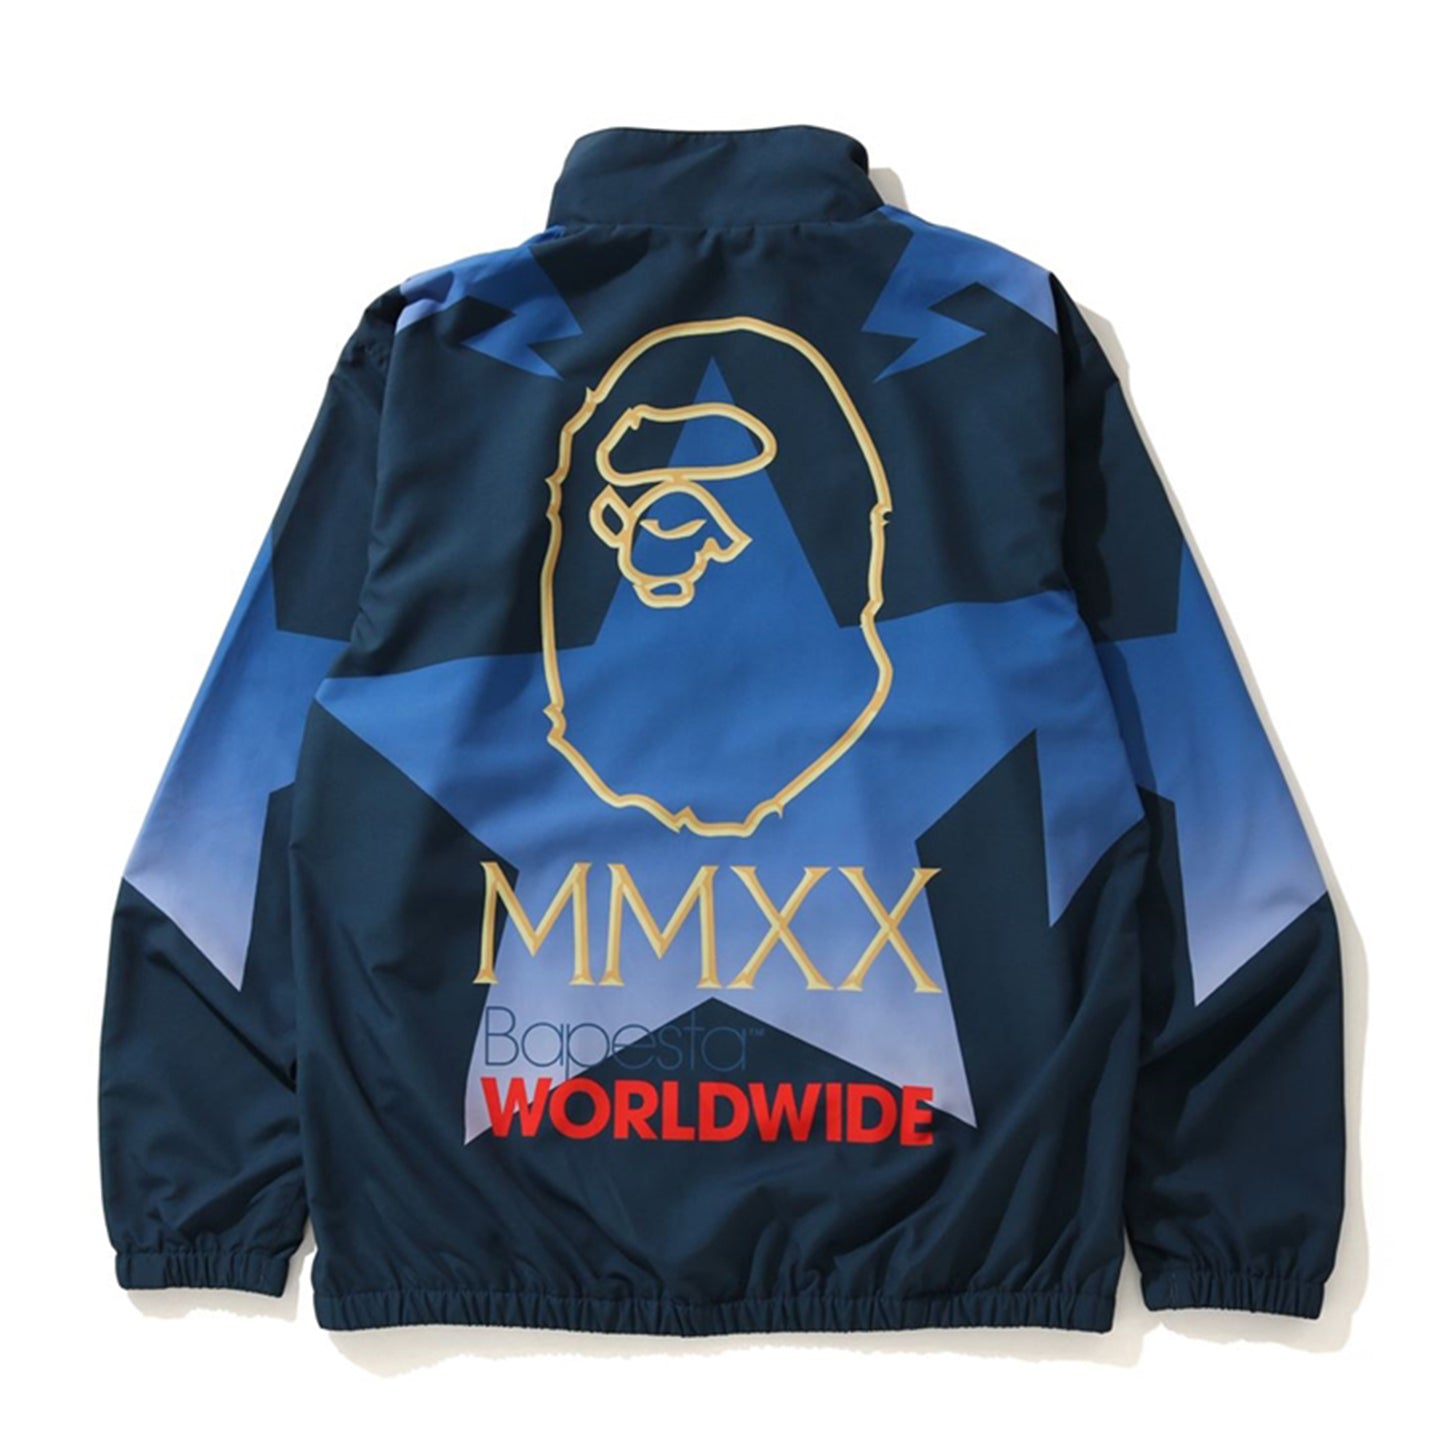 Bape MMXX Worldwide Jacket (C)